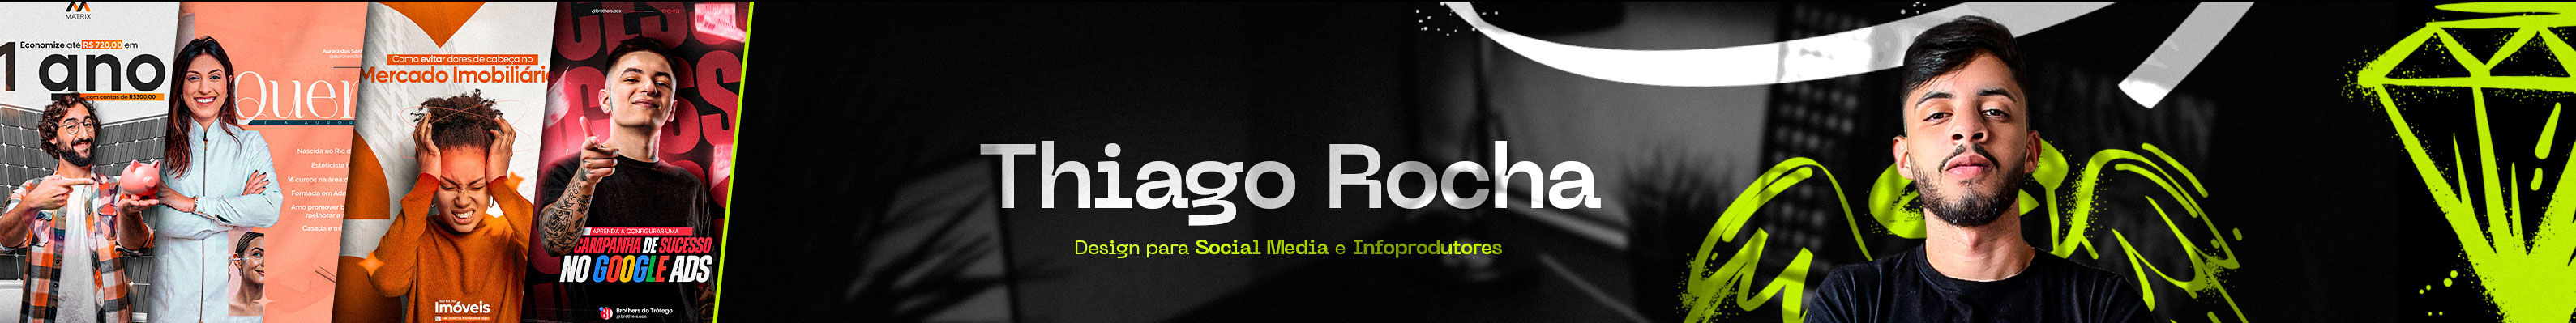 Bannière de profil de Thiago Rocha Designer